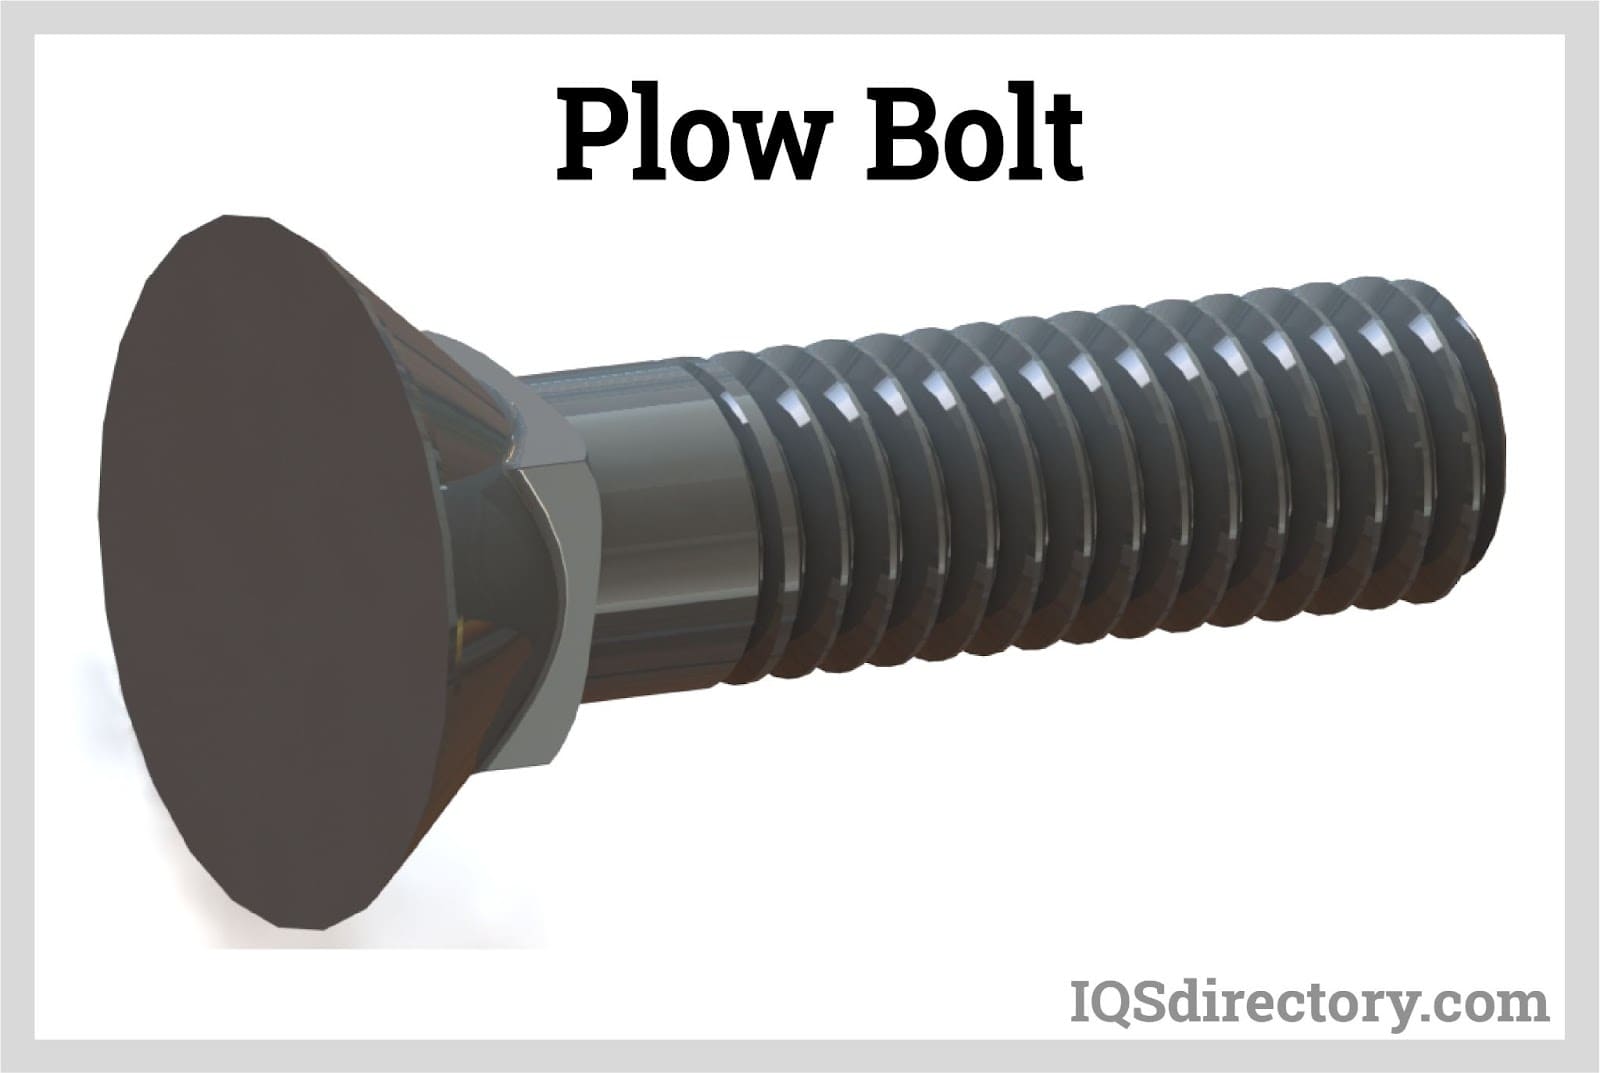 Plow Bolt